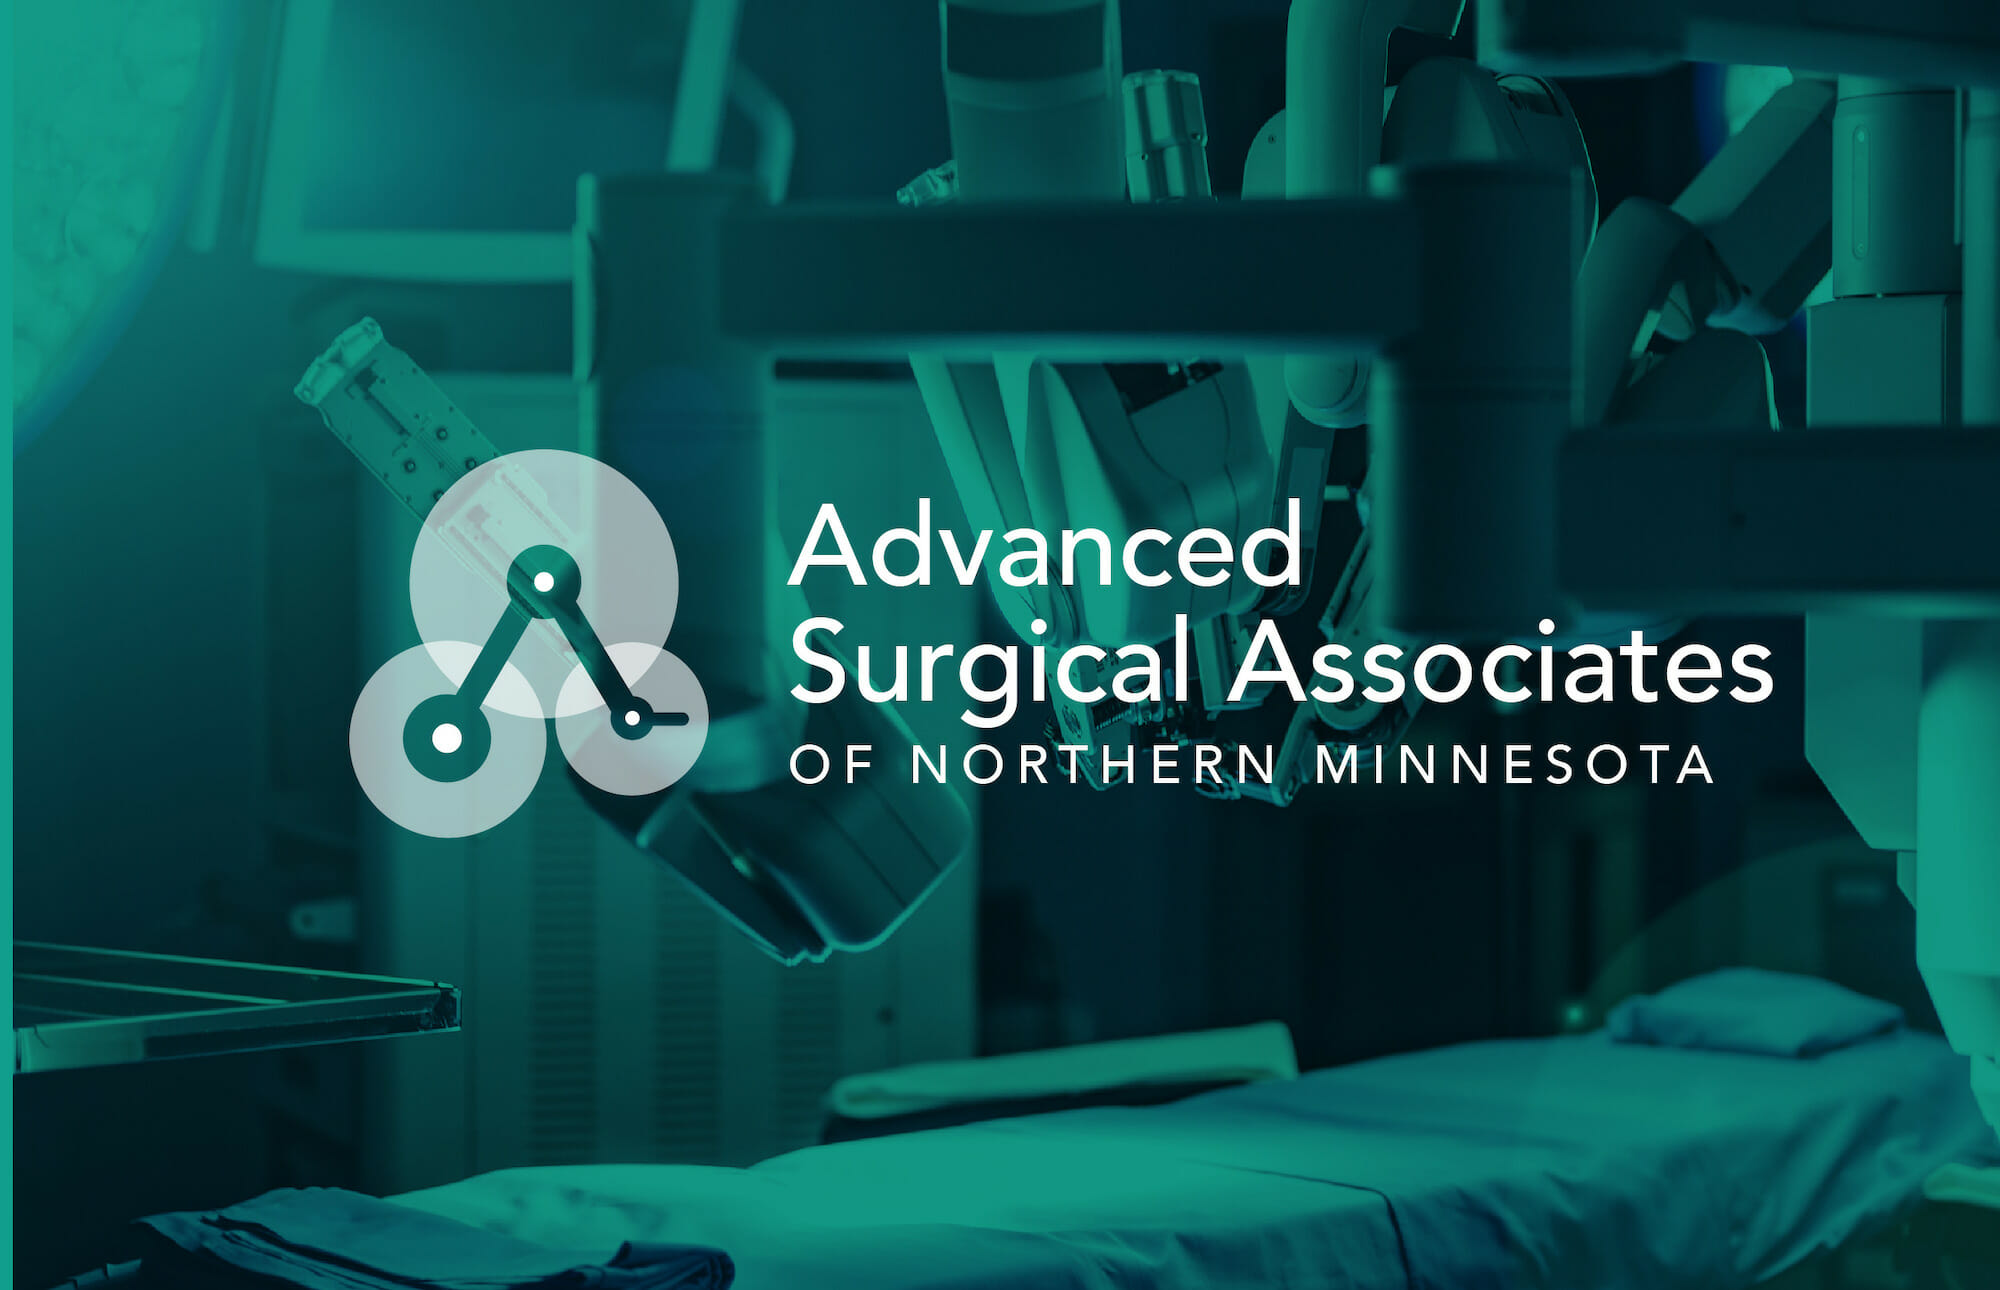 Advanced Surgical Associates of Northern Minnesota full logo, designed by Šek Design Studio